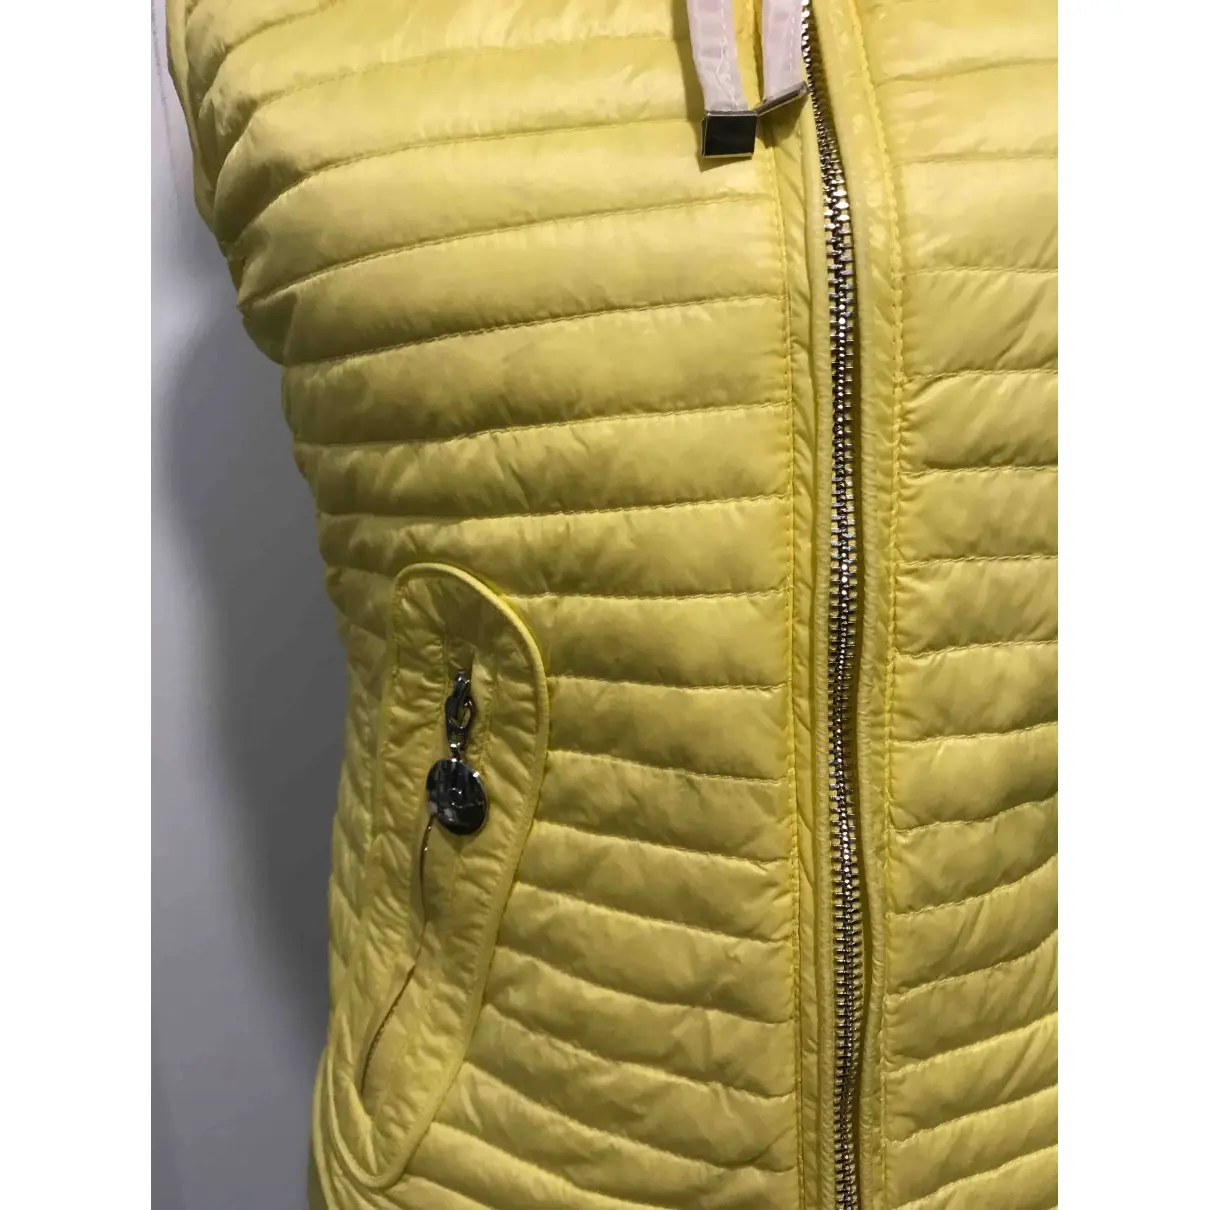 Pierre Cardin Jacket for sale - Vintage